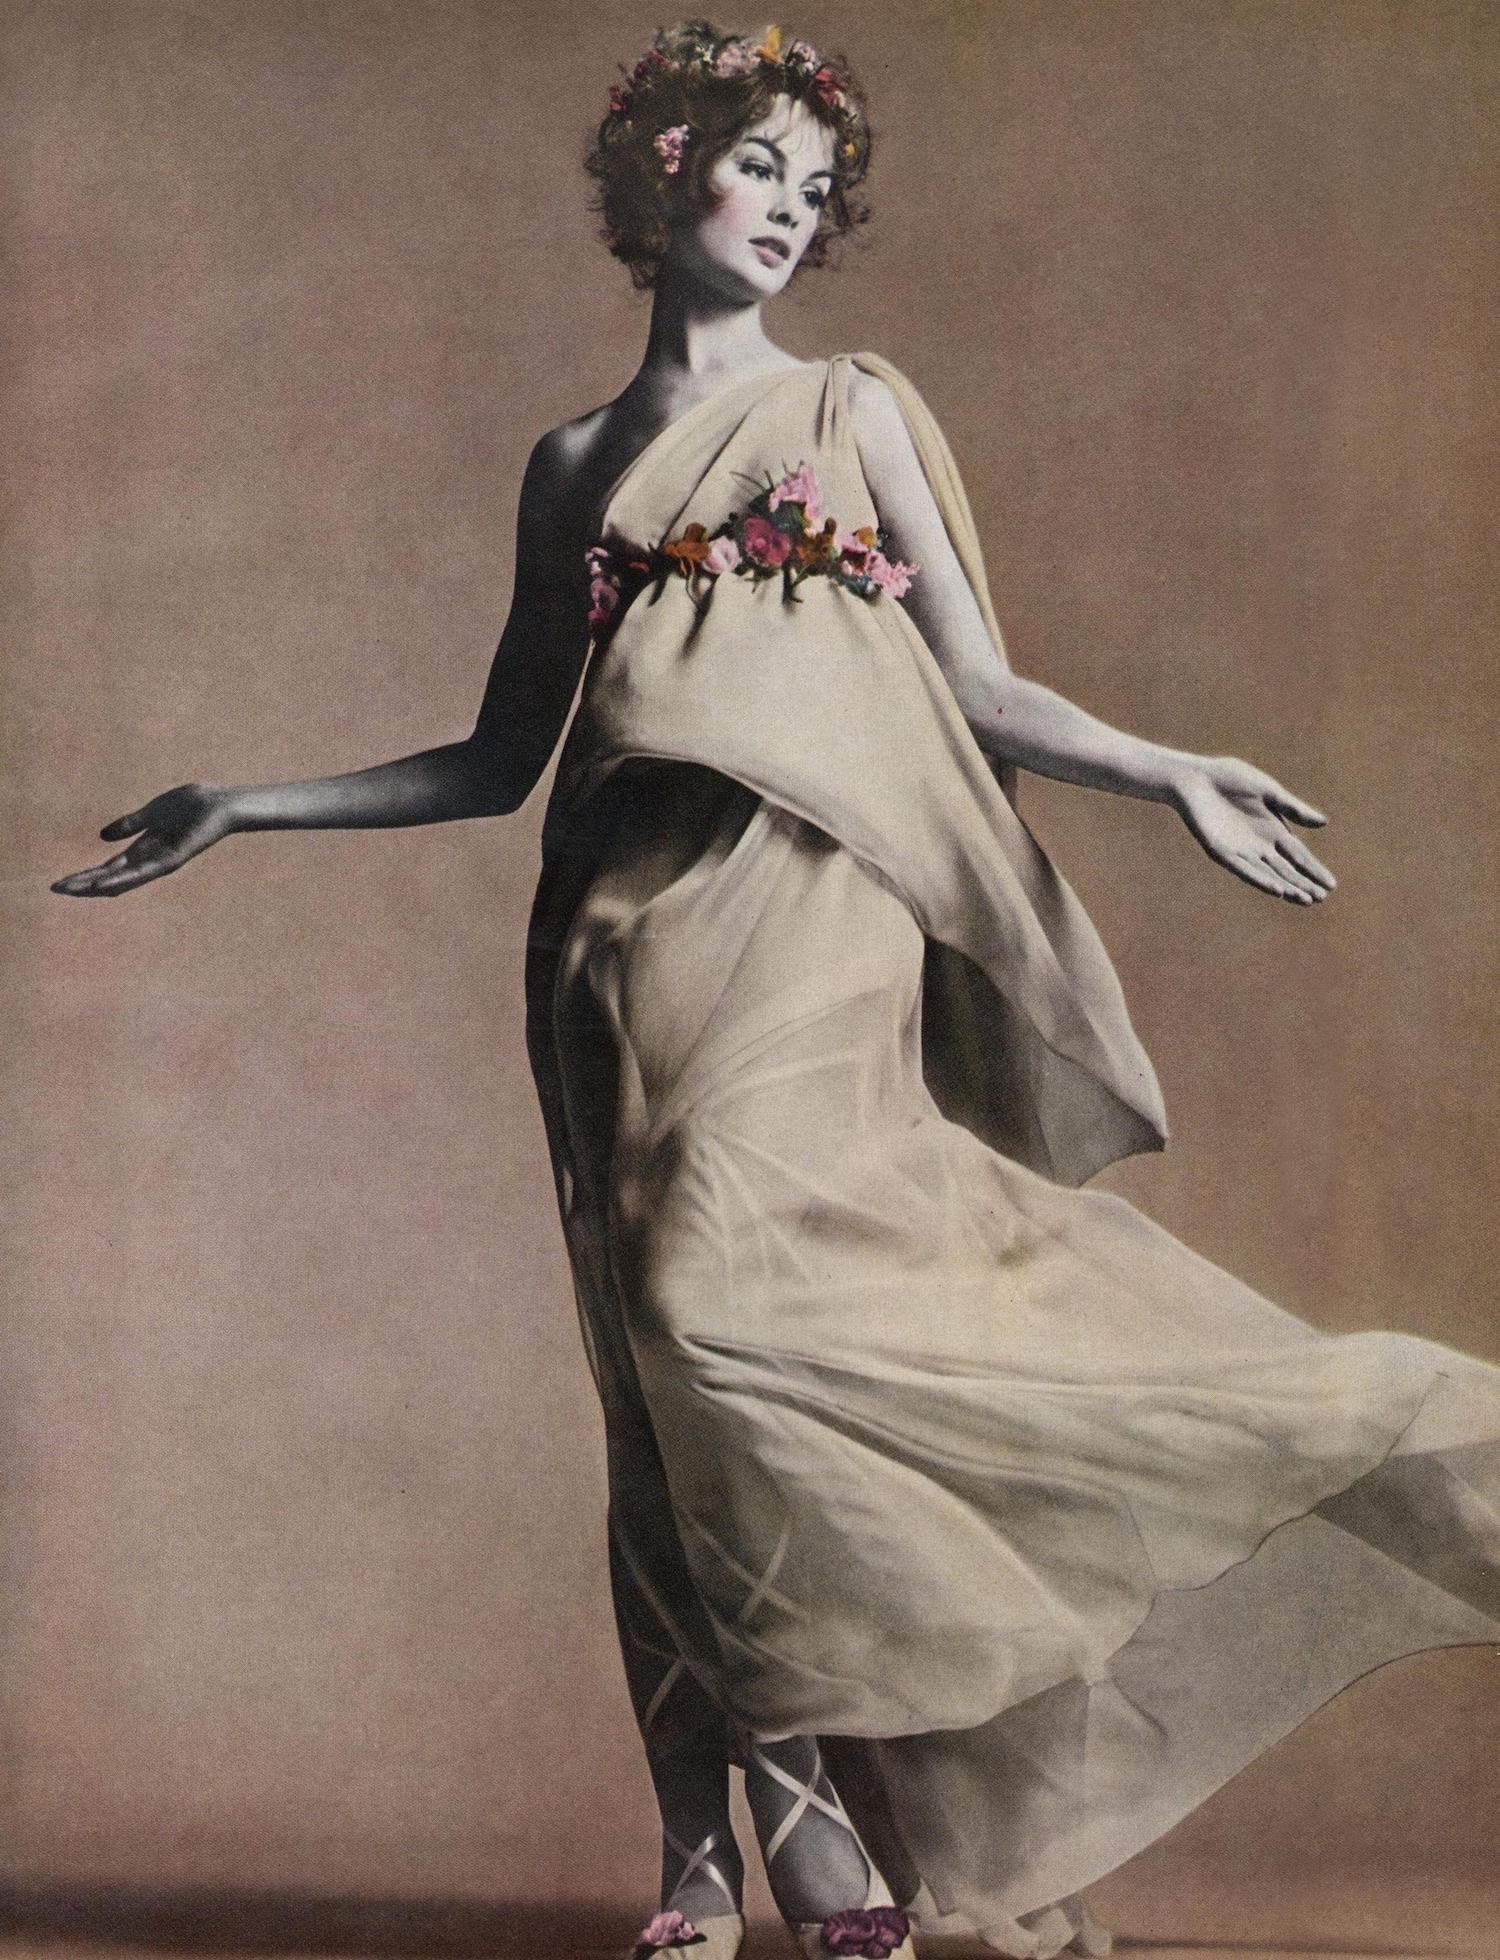 Jean-Shrimpton-by-Richard-Avedon-US-Vogue-April-15-1968-00008.jpeg